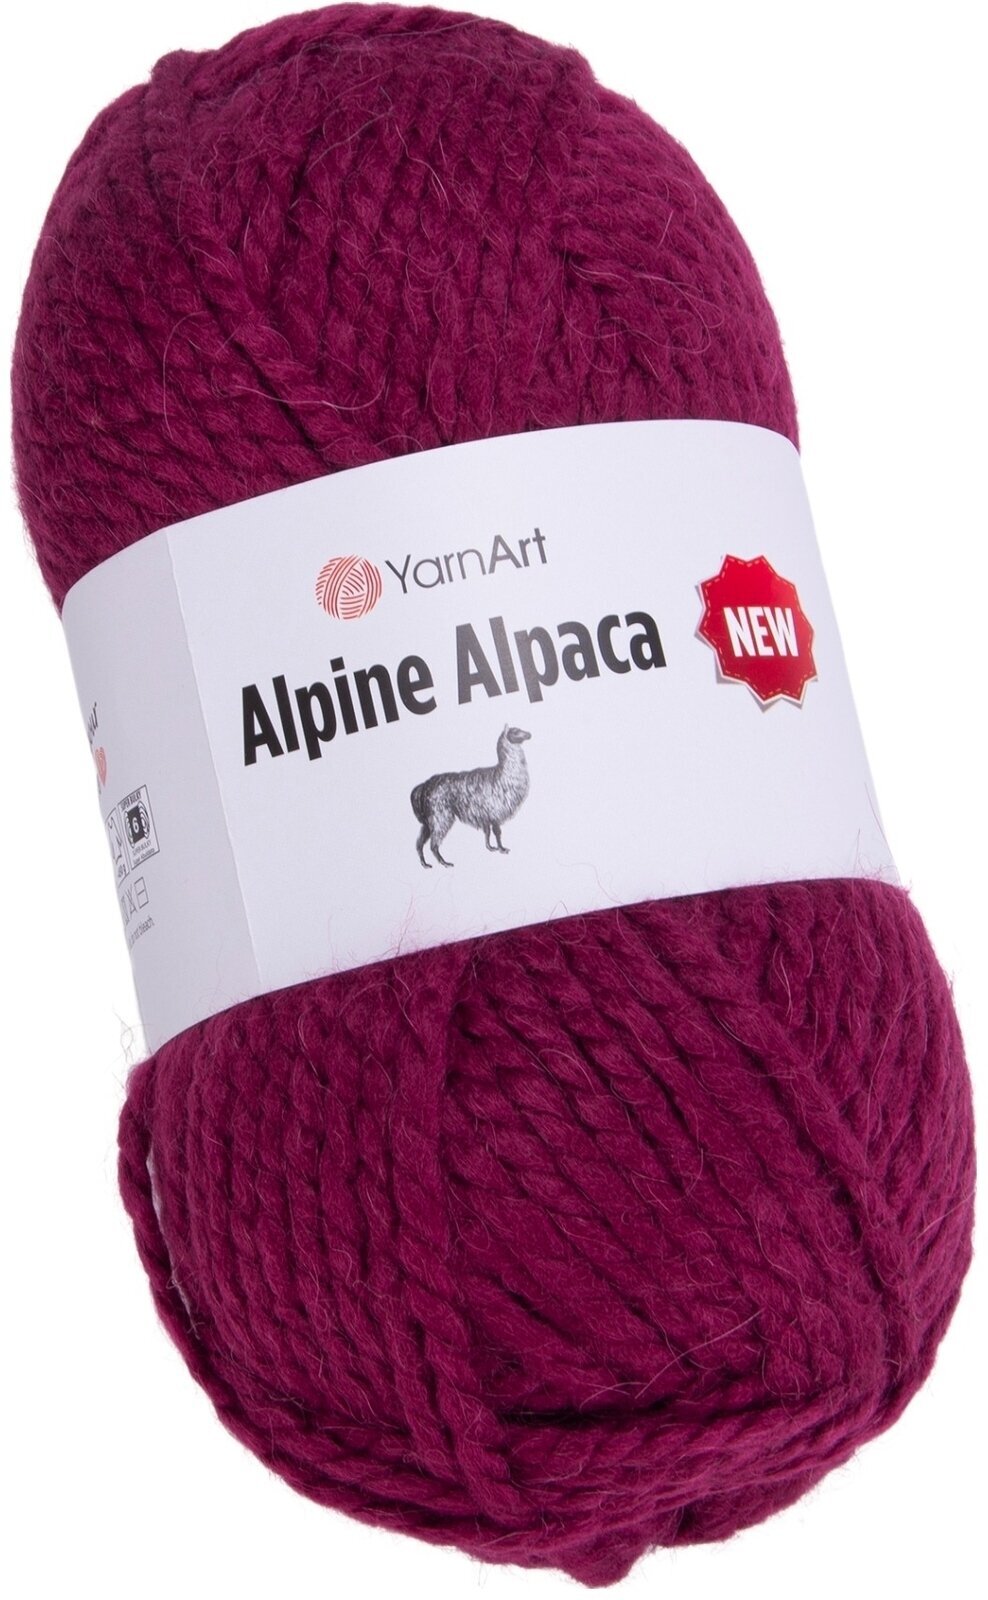 Breigaren Yarn Art Alpine Alpaca 1441